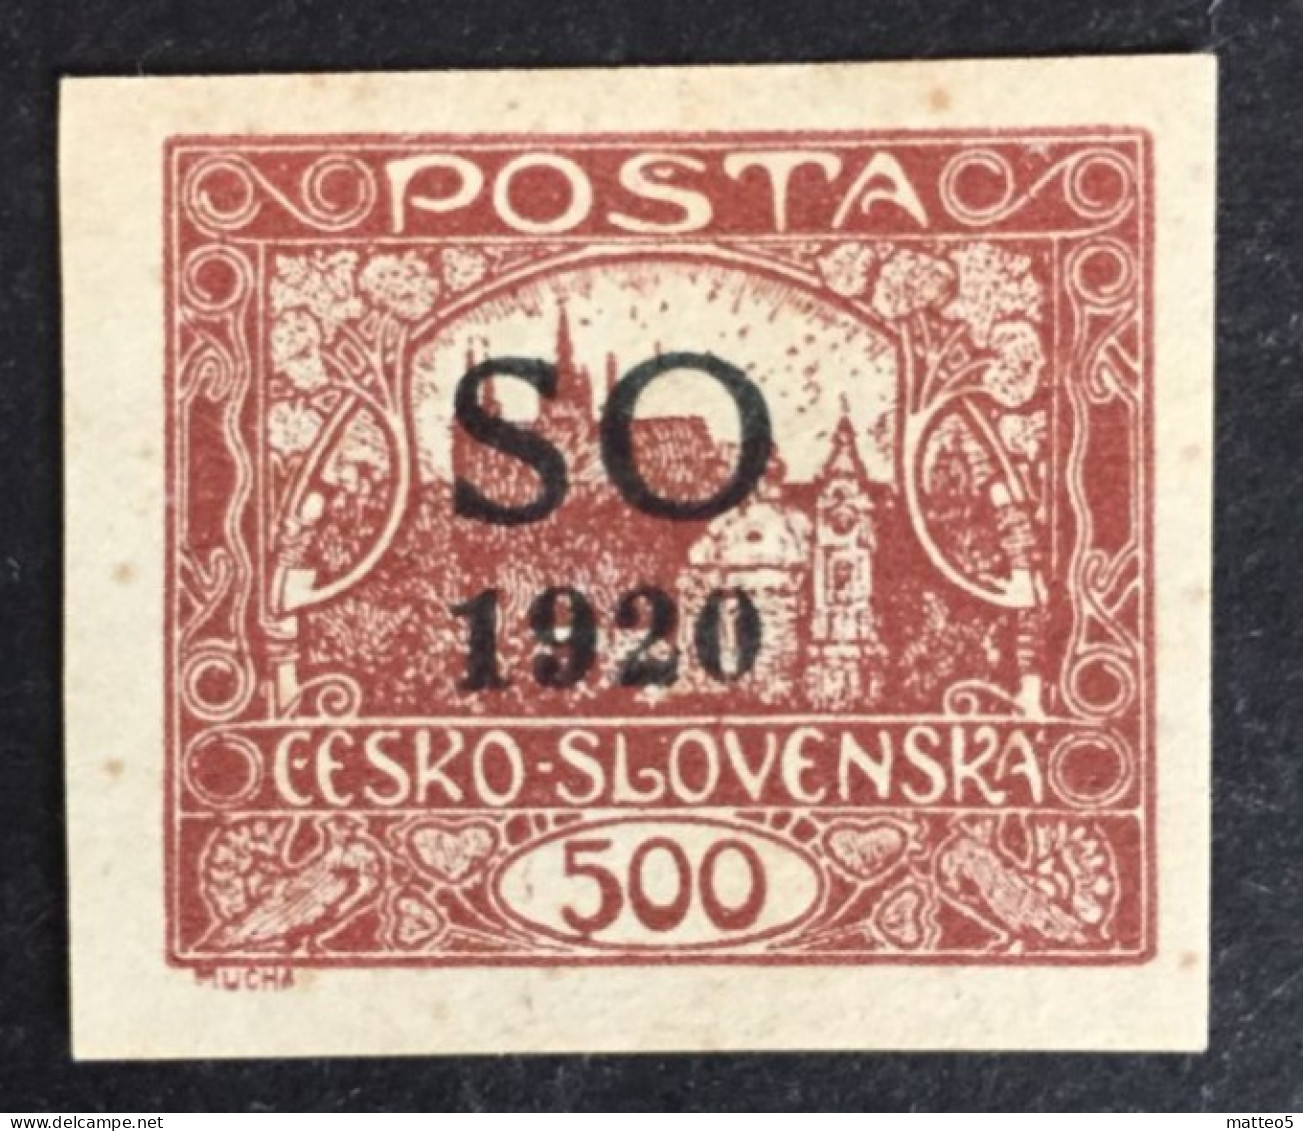 1920 Poland Eastern Silesia Czechoslovakia - Hradcany At Prague Overprint SO 500 - Unused ( Mint Hinged) - Silesia